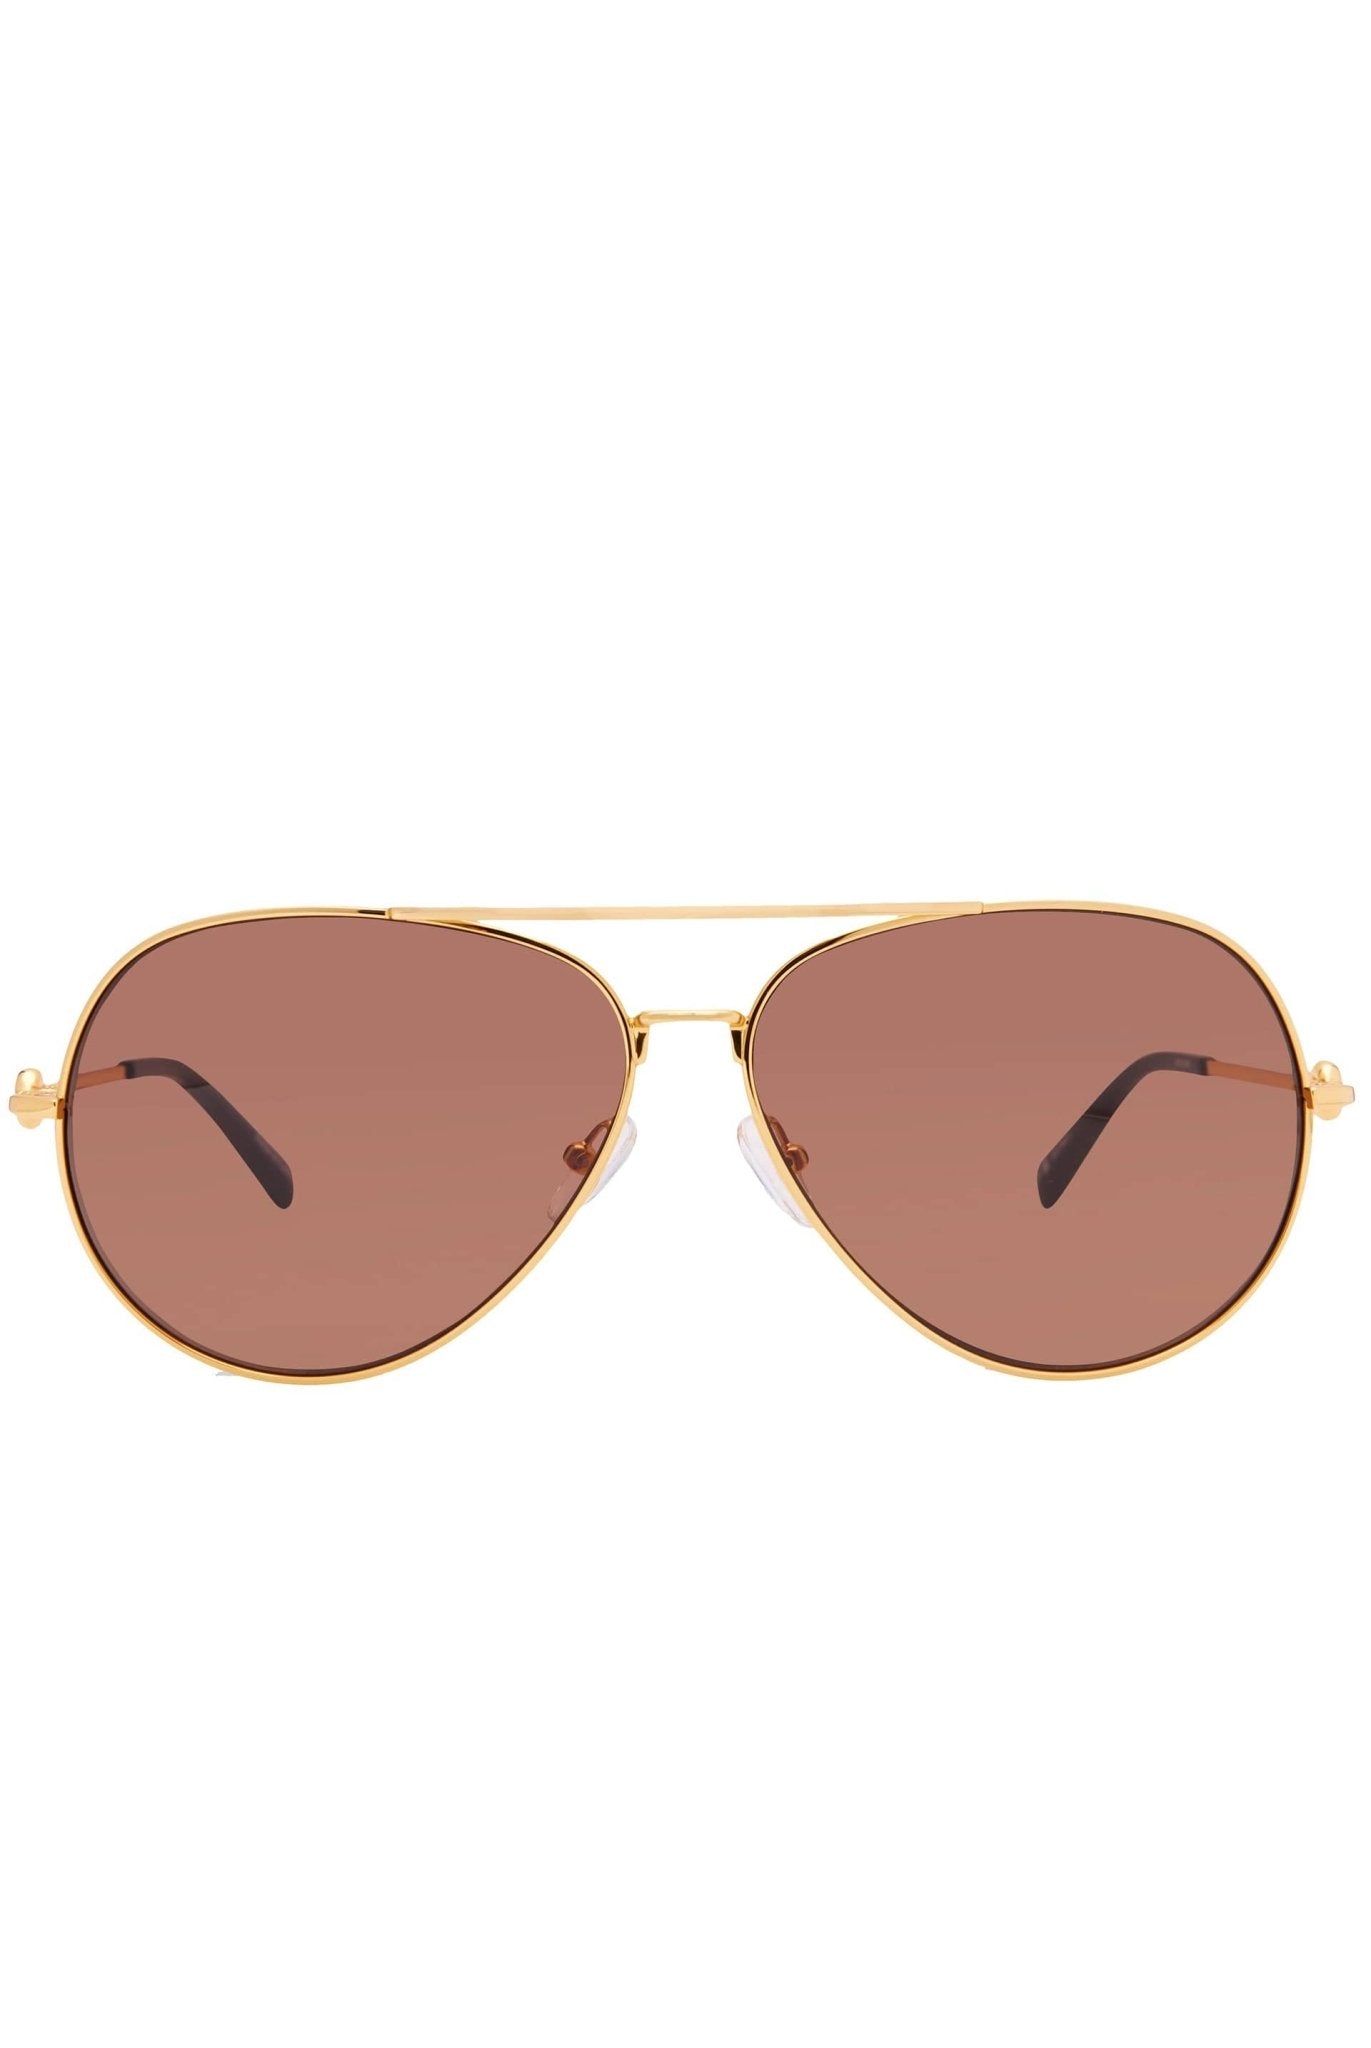 The Ursula Sunglasses in Brown Gradient - Heidi Klein - UK Store